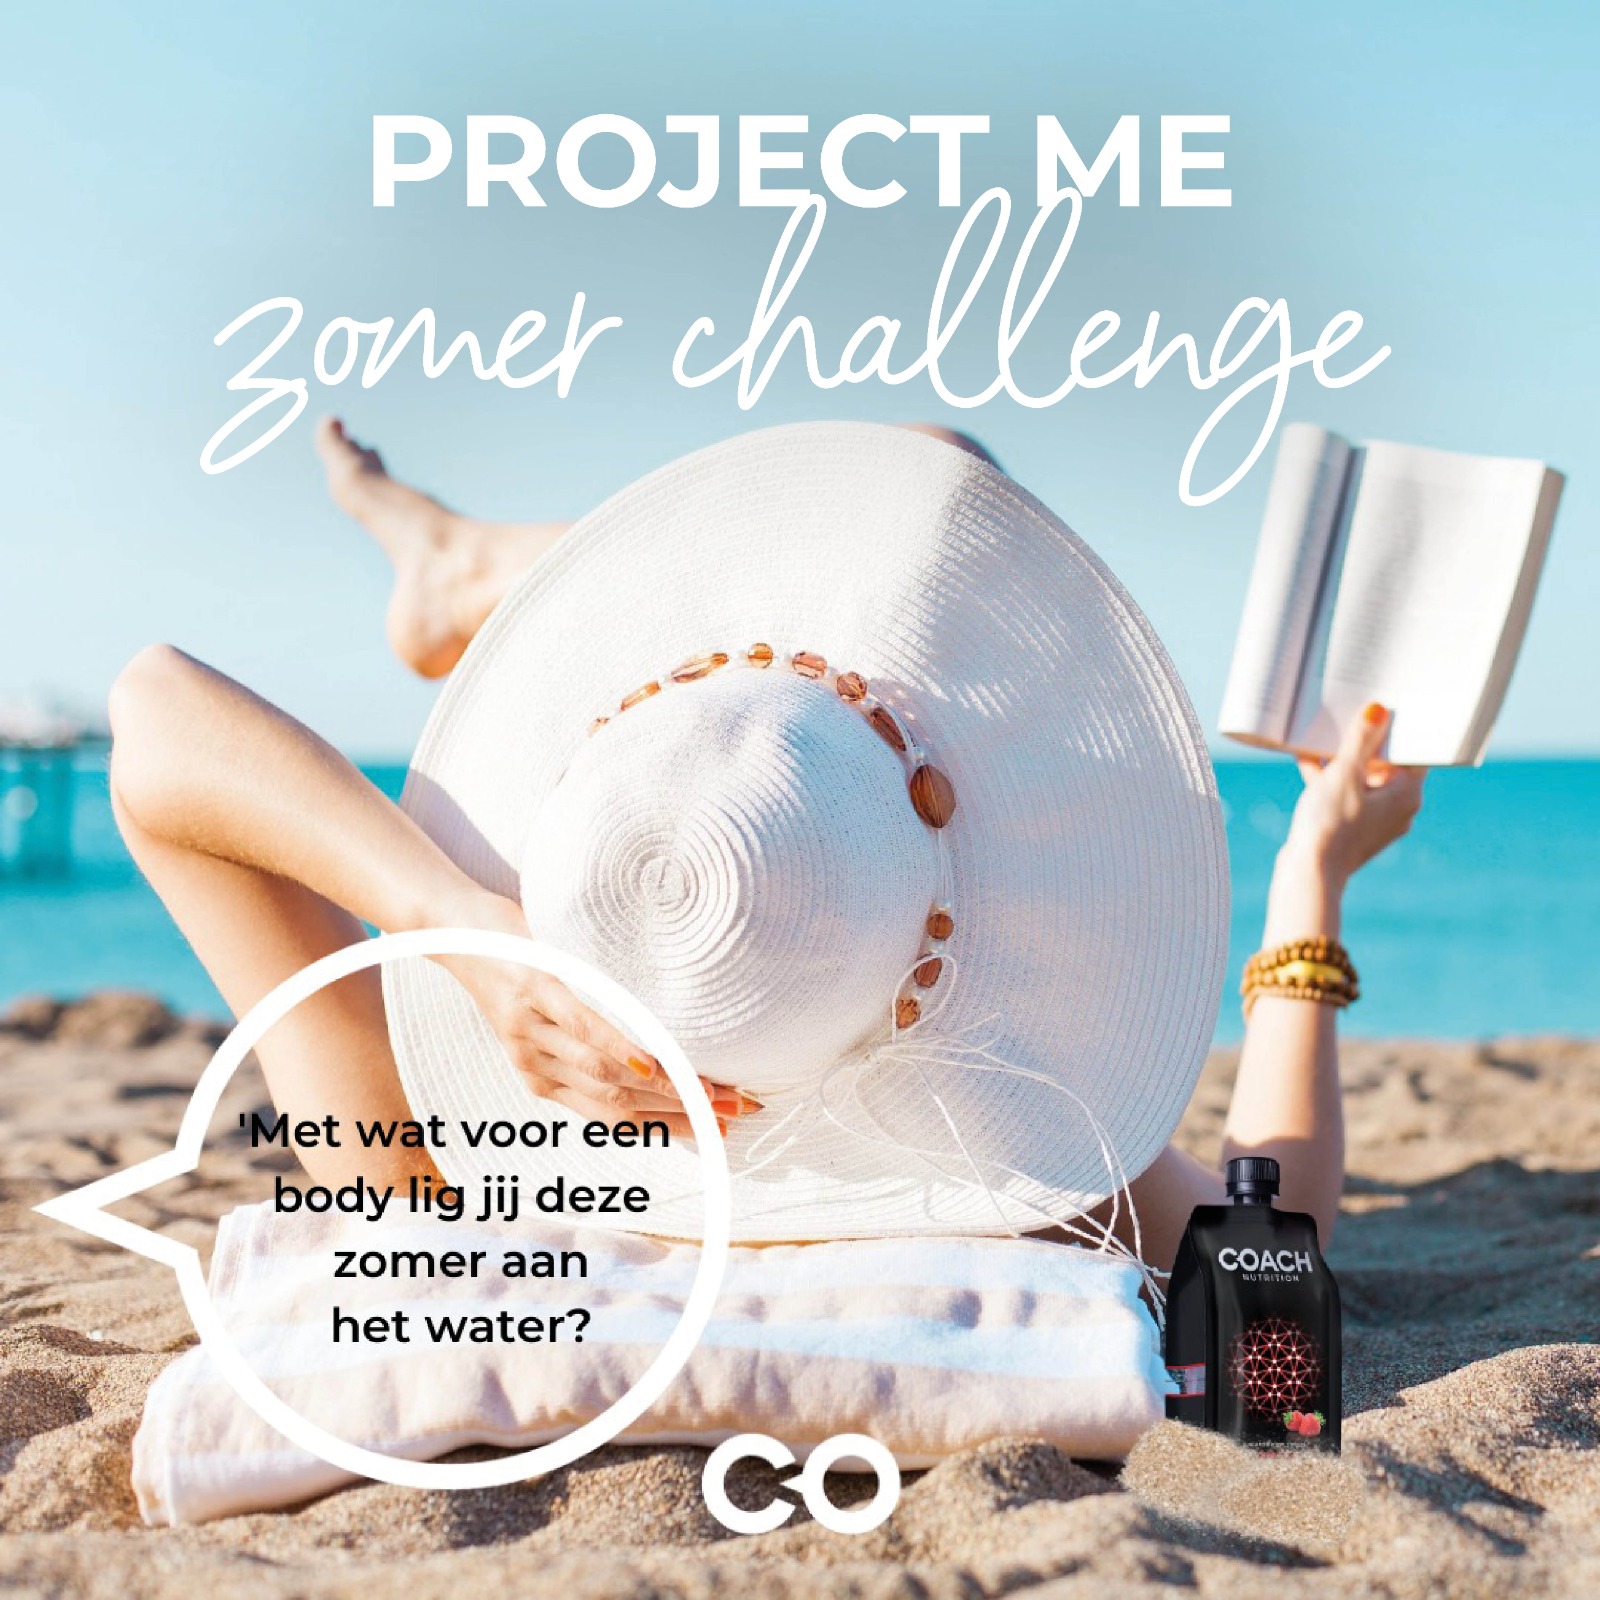 Project me actie zomer challenge